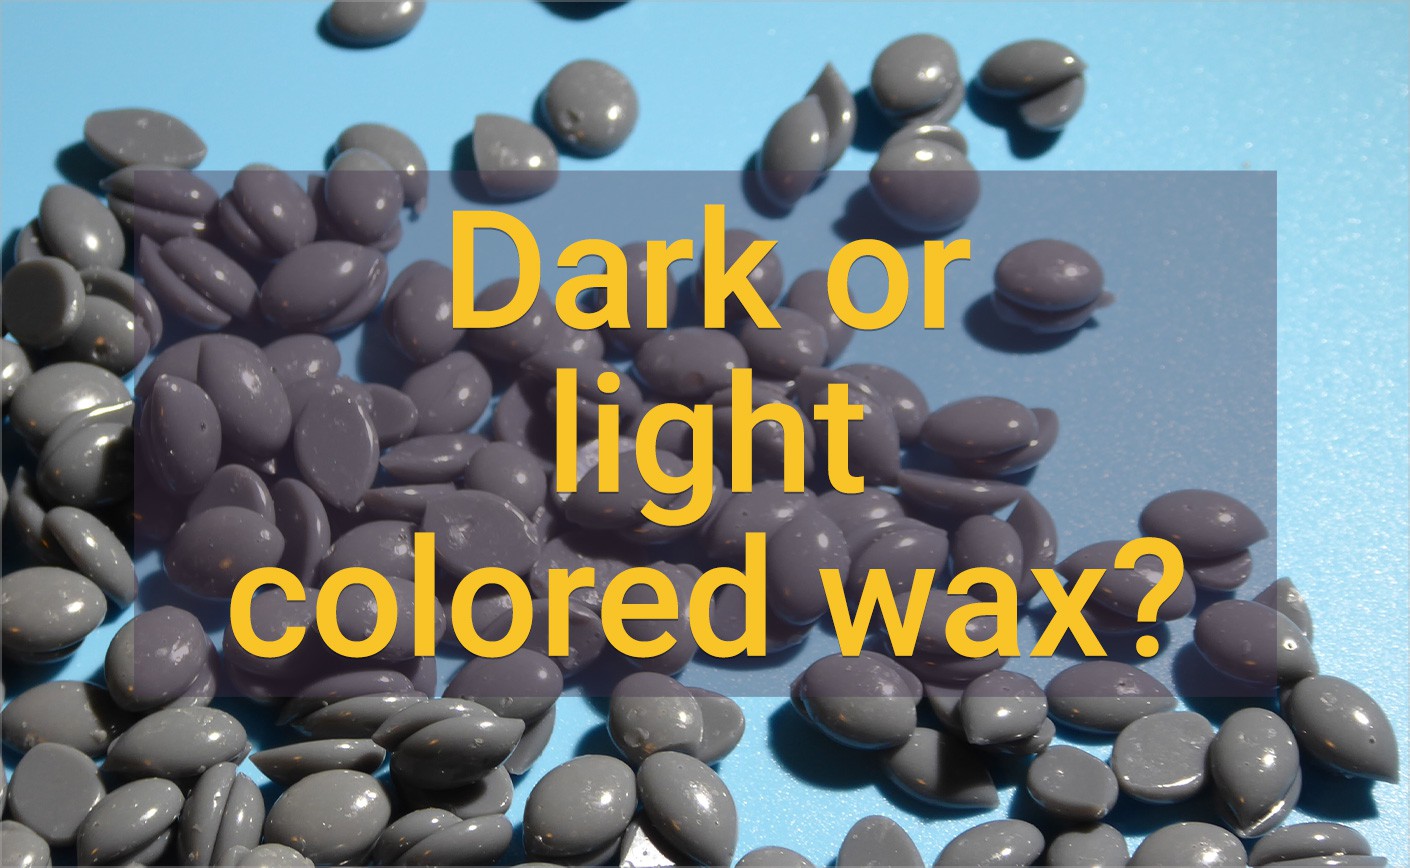 Dark or light colored wax?